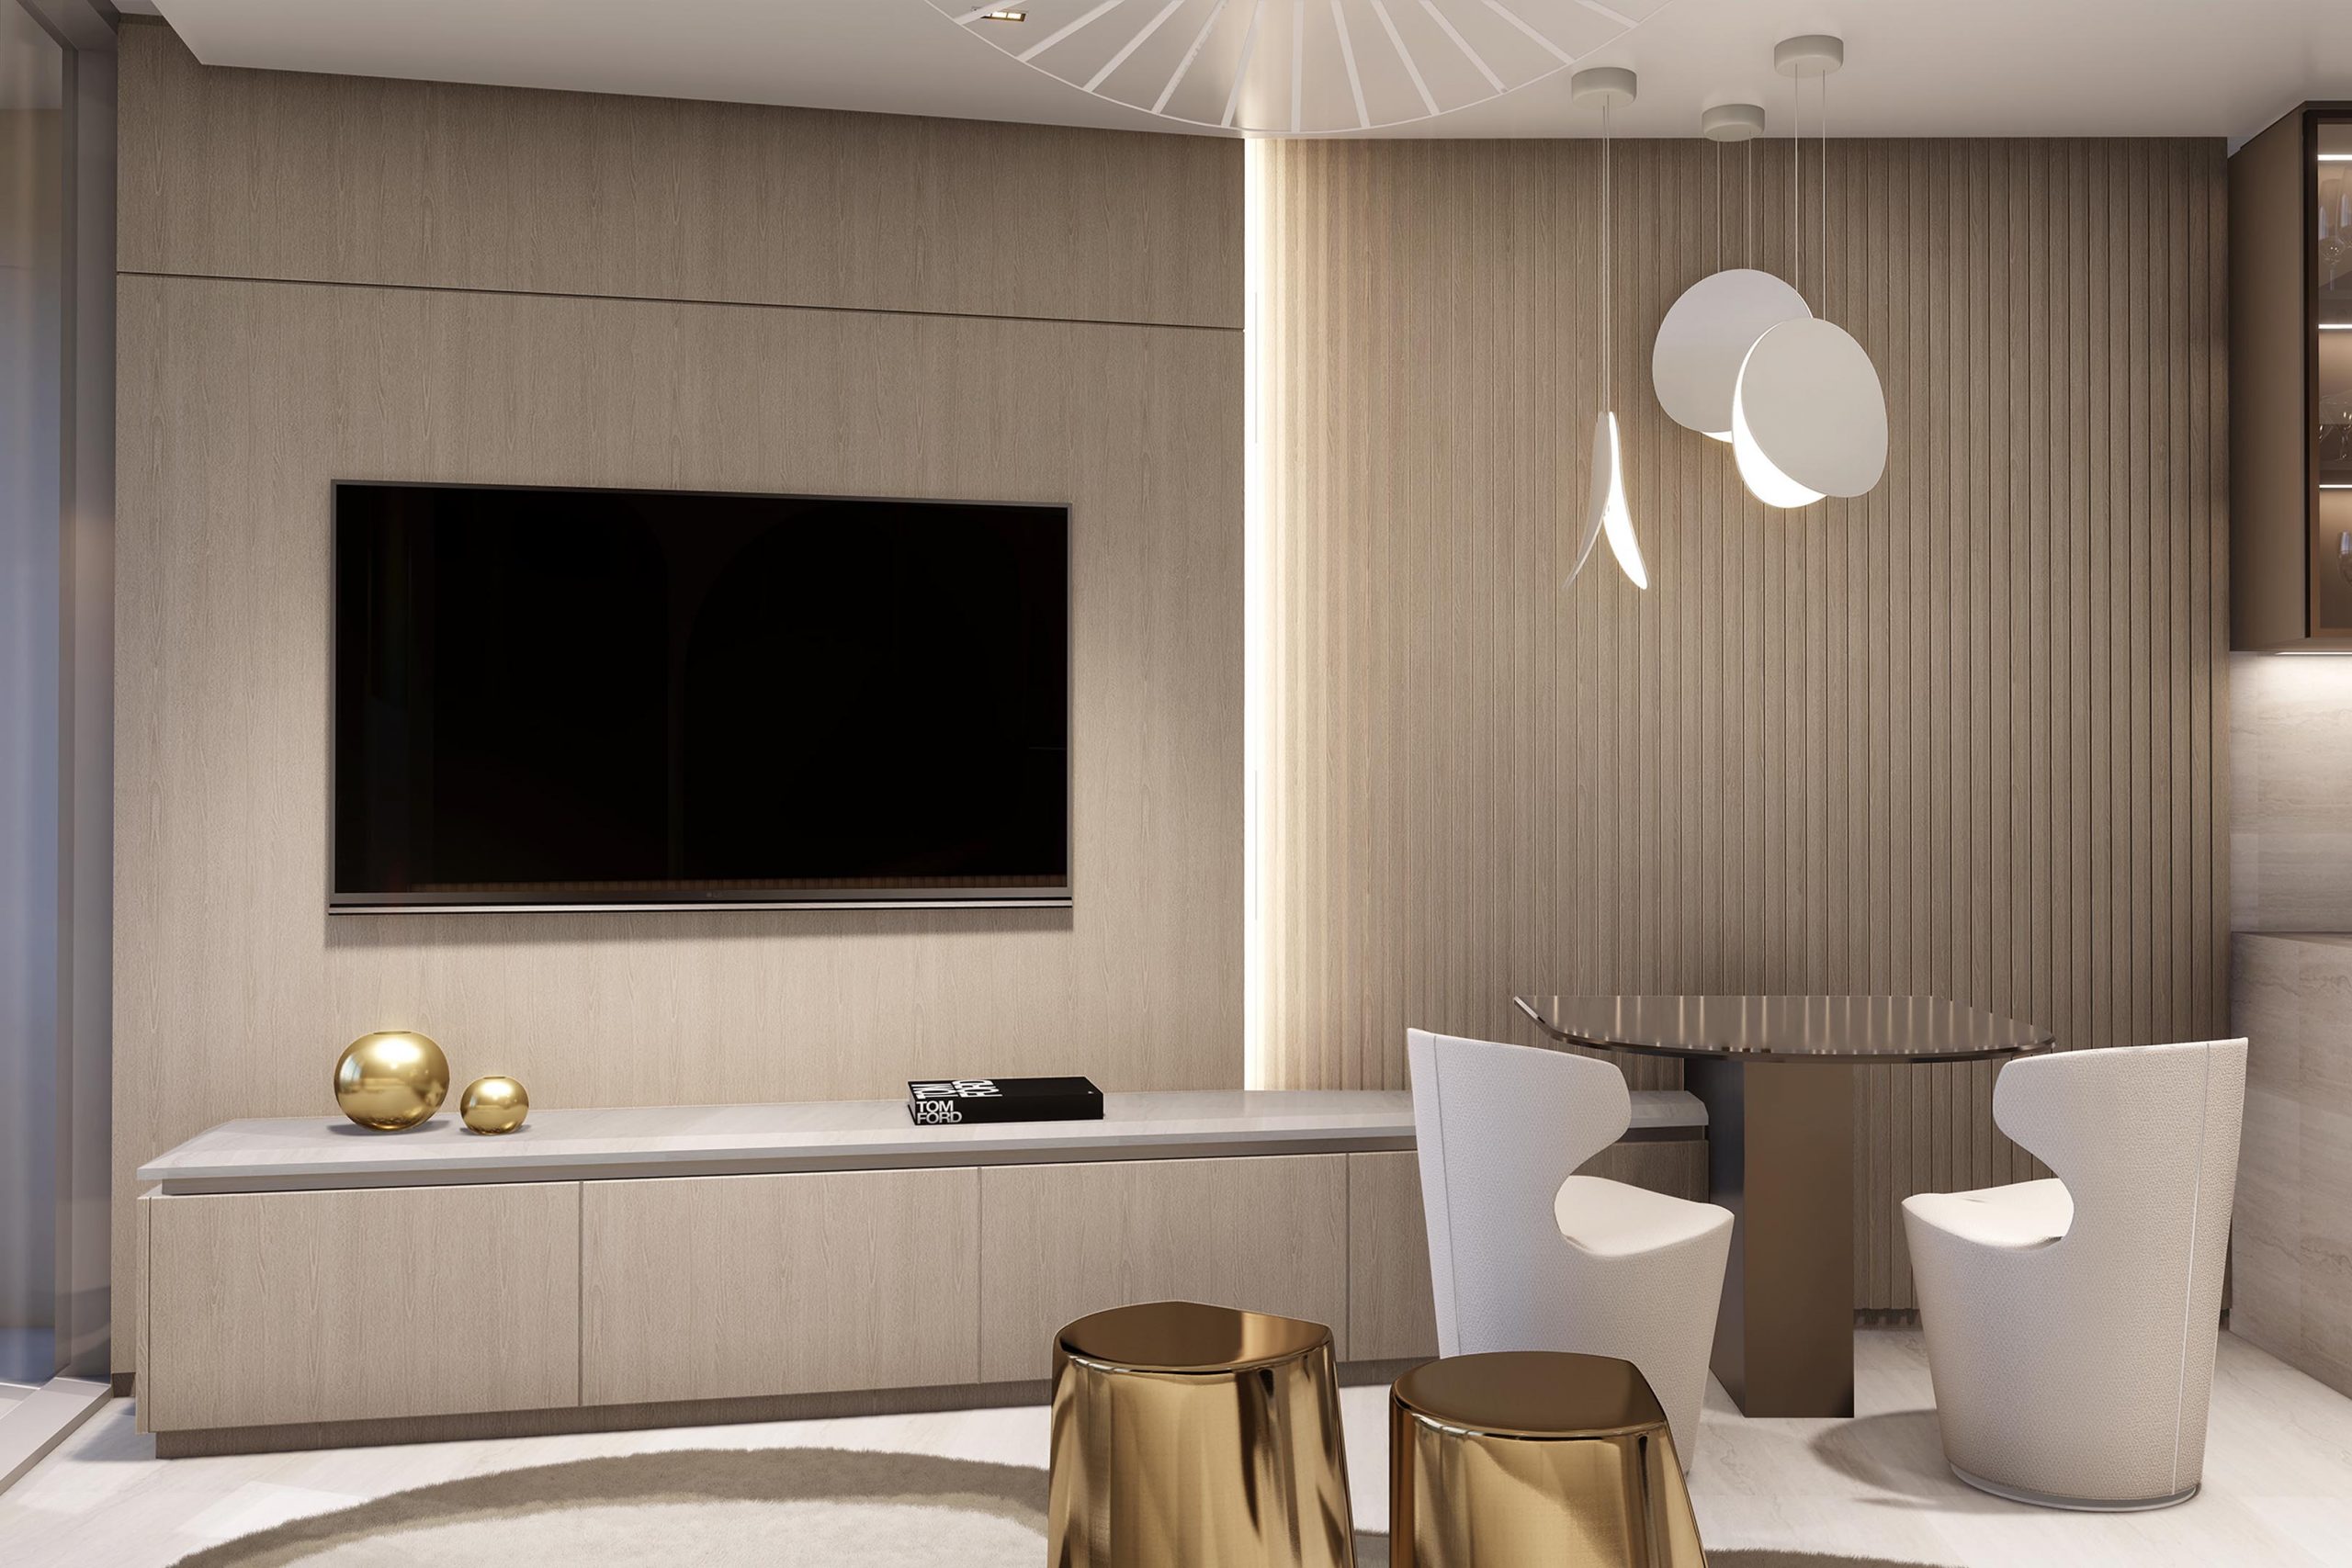 High-end Interior Design Living Room in light sand colors, Custom millwork in ash oak wood, bulky dining chairs in off-white velvet fabric, travertine floor